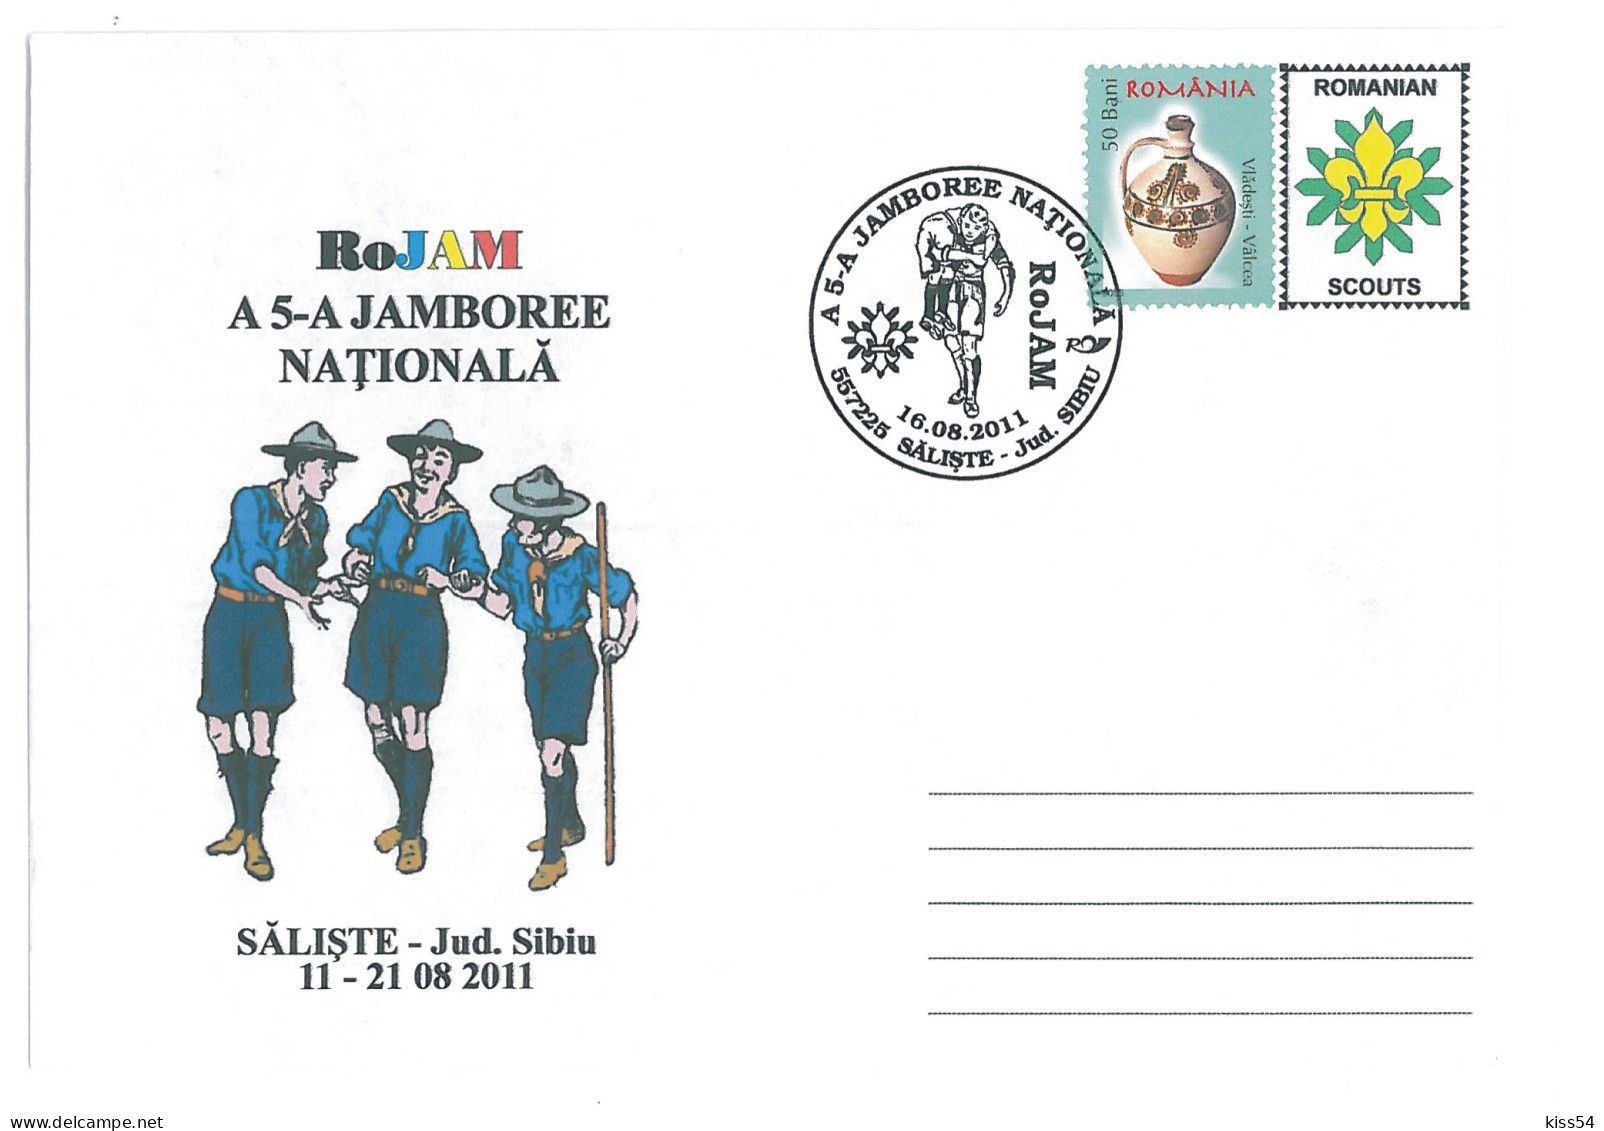 SC 47 - 1303 ROMANIA, National JAMBOREE, Scout - Cover - Used - 2011 - Cartas & Documentos